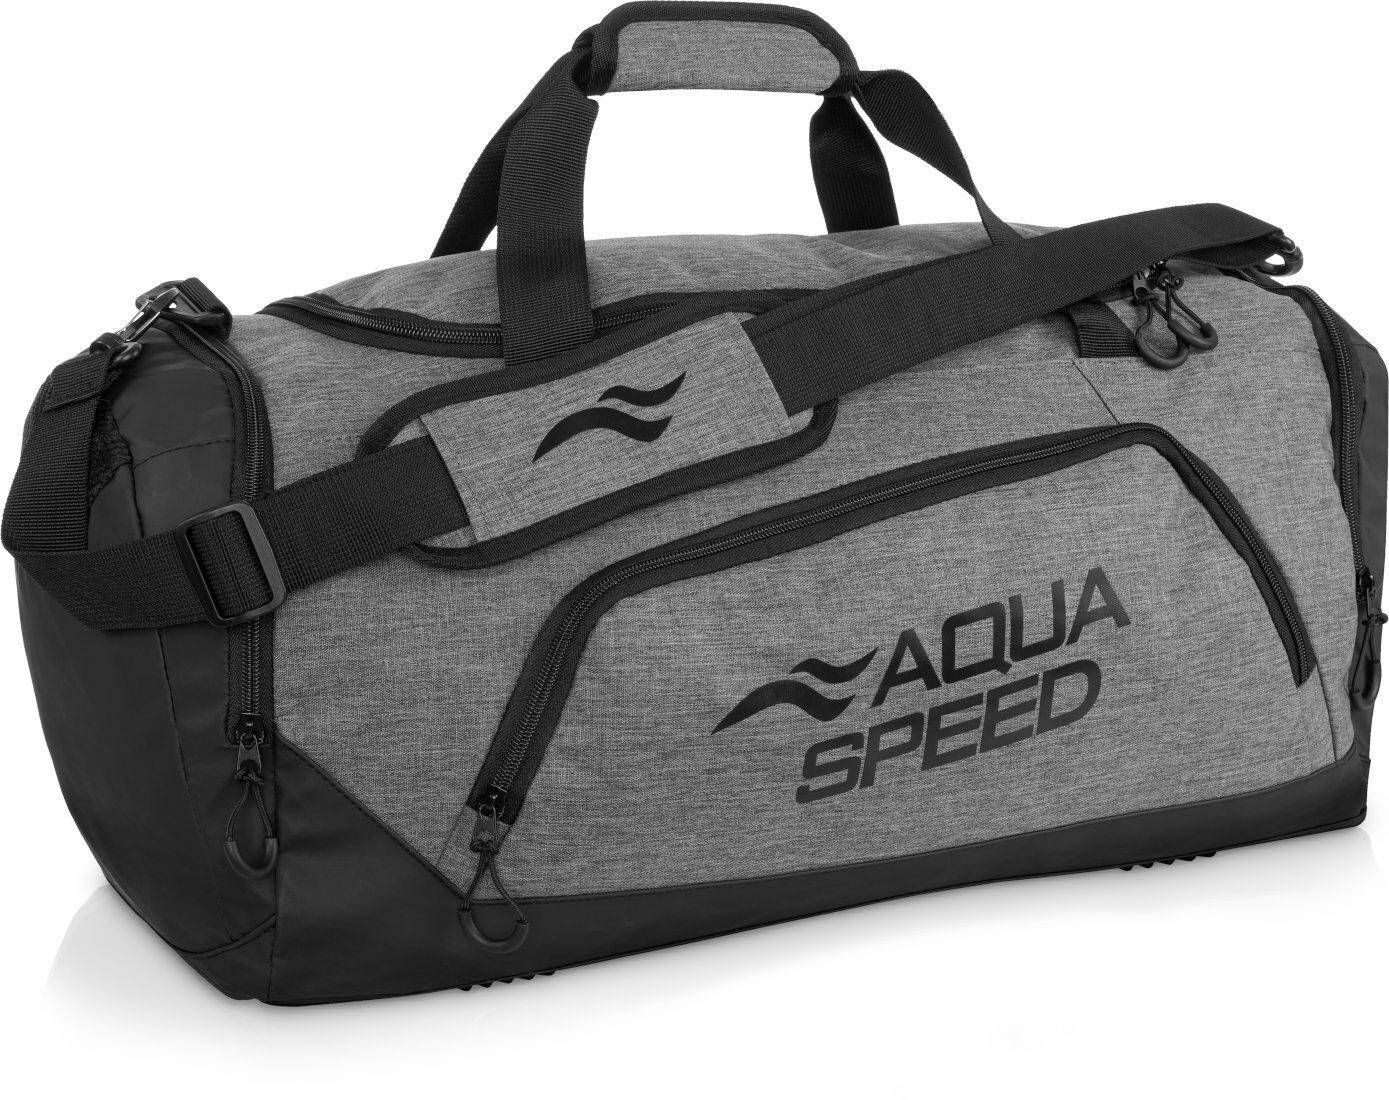 AQUA-SPEED duffle bag size L col. 37